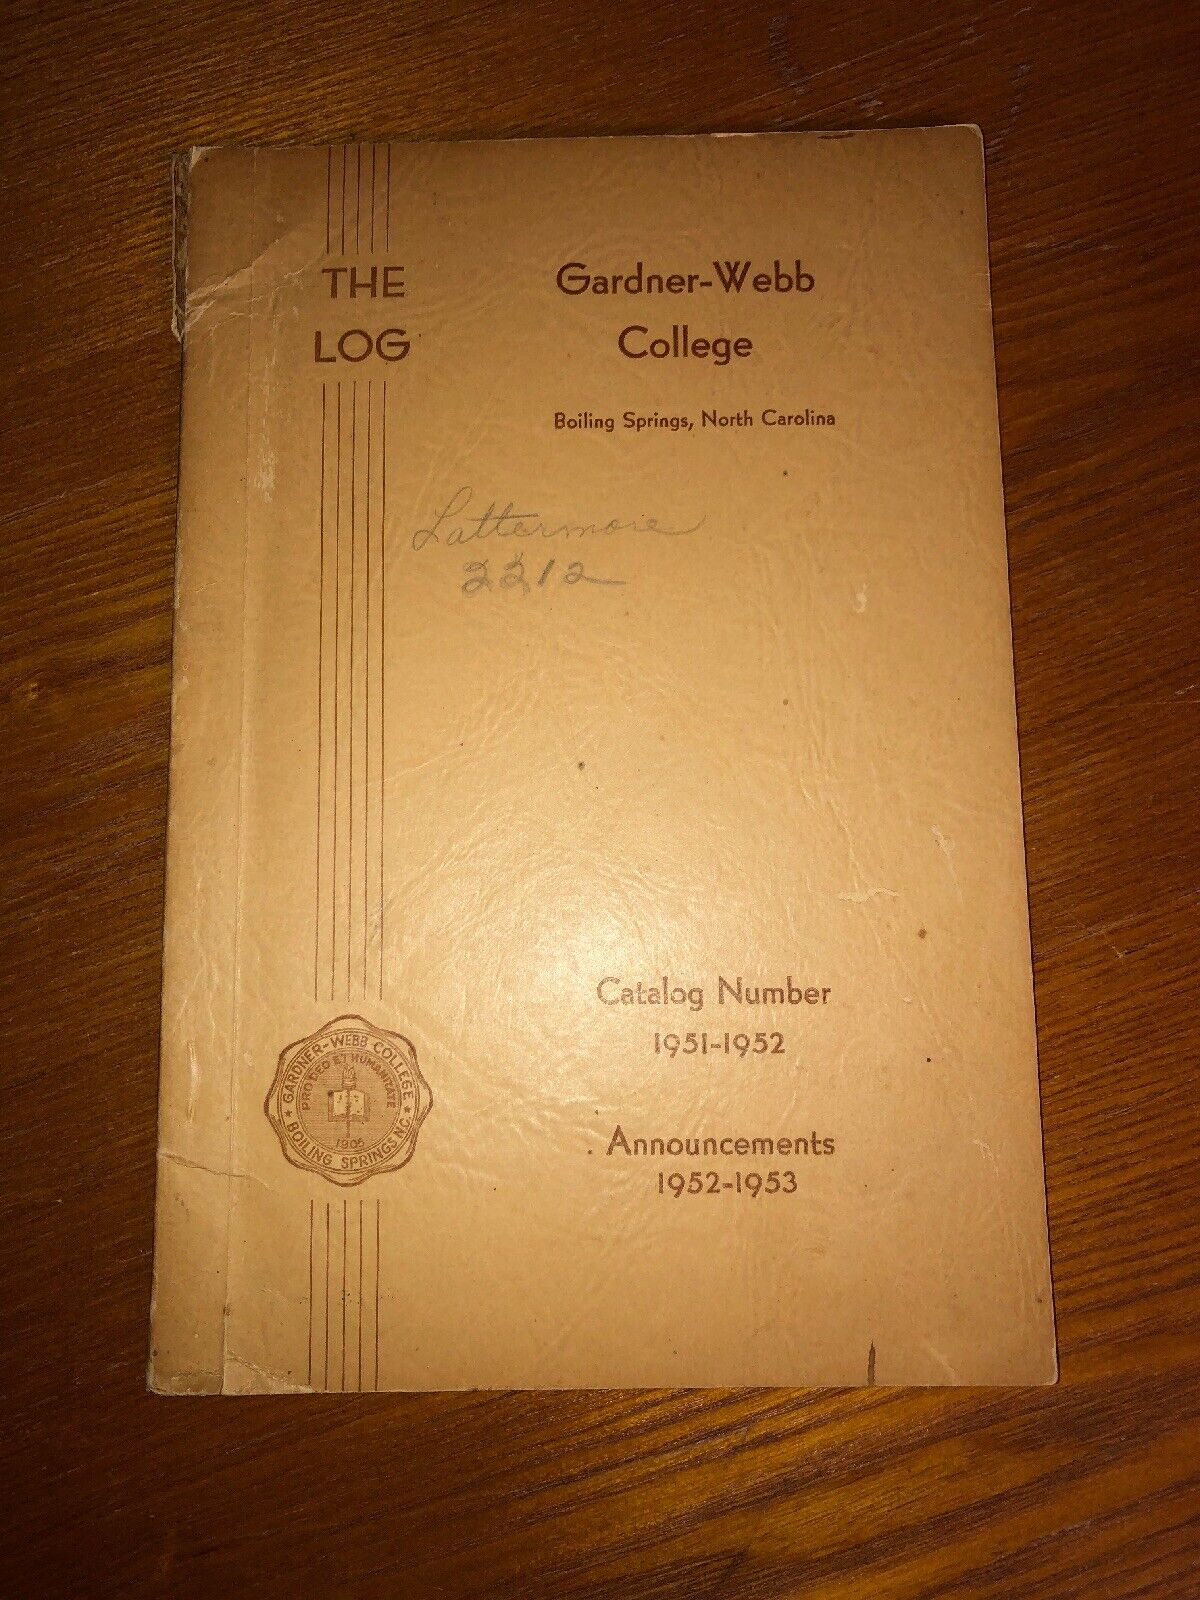 The Log Gardner Webb College 1952-53 Catalog